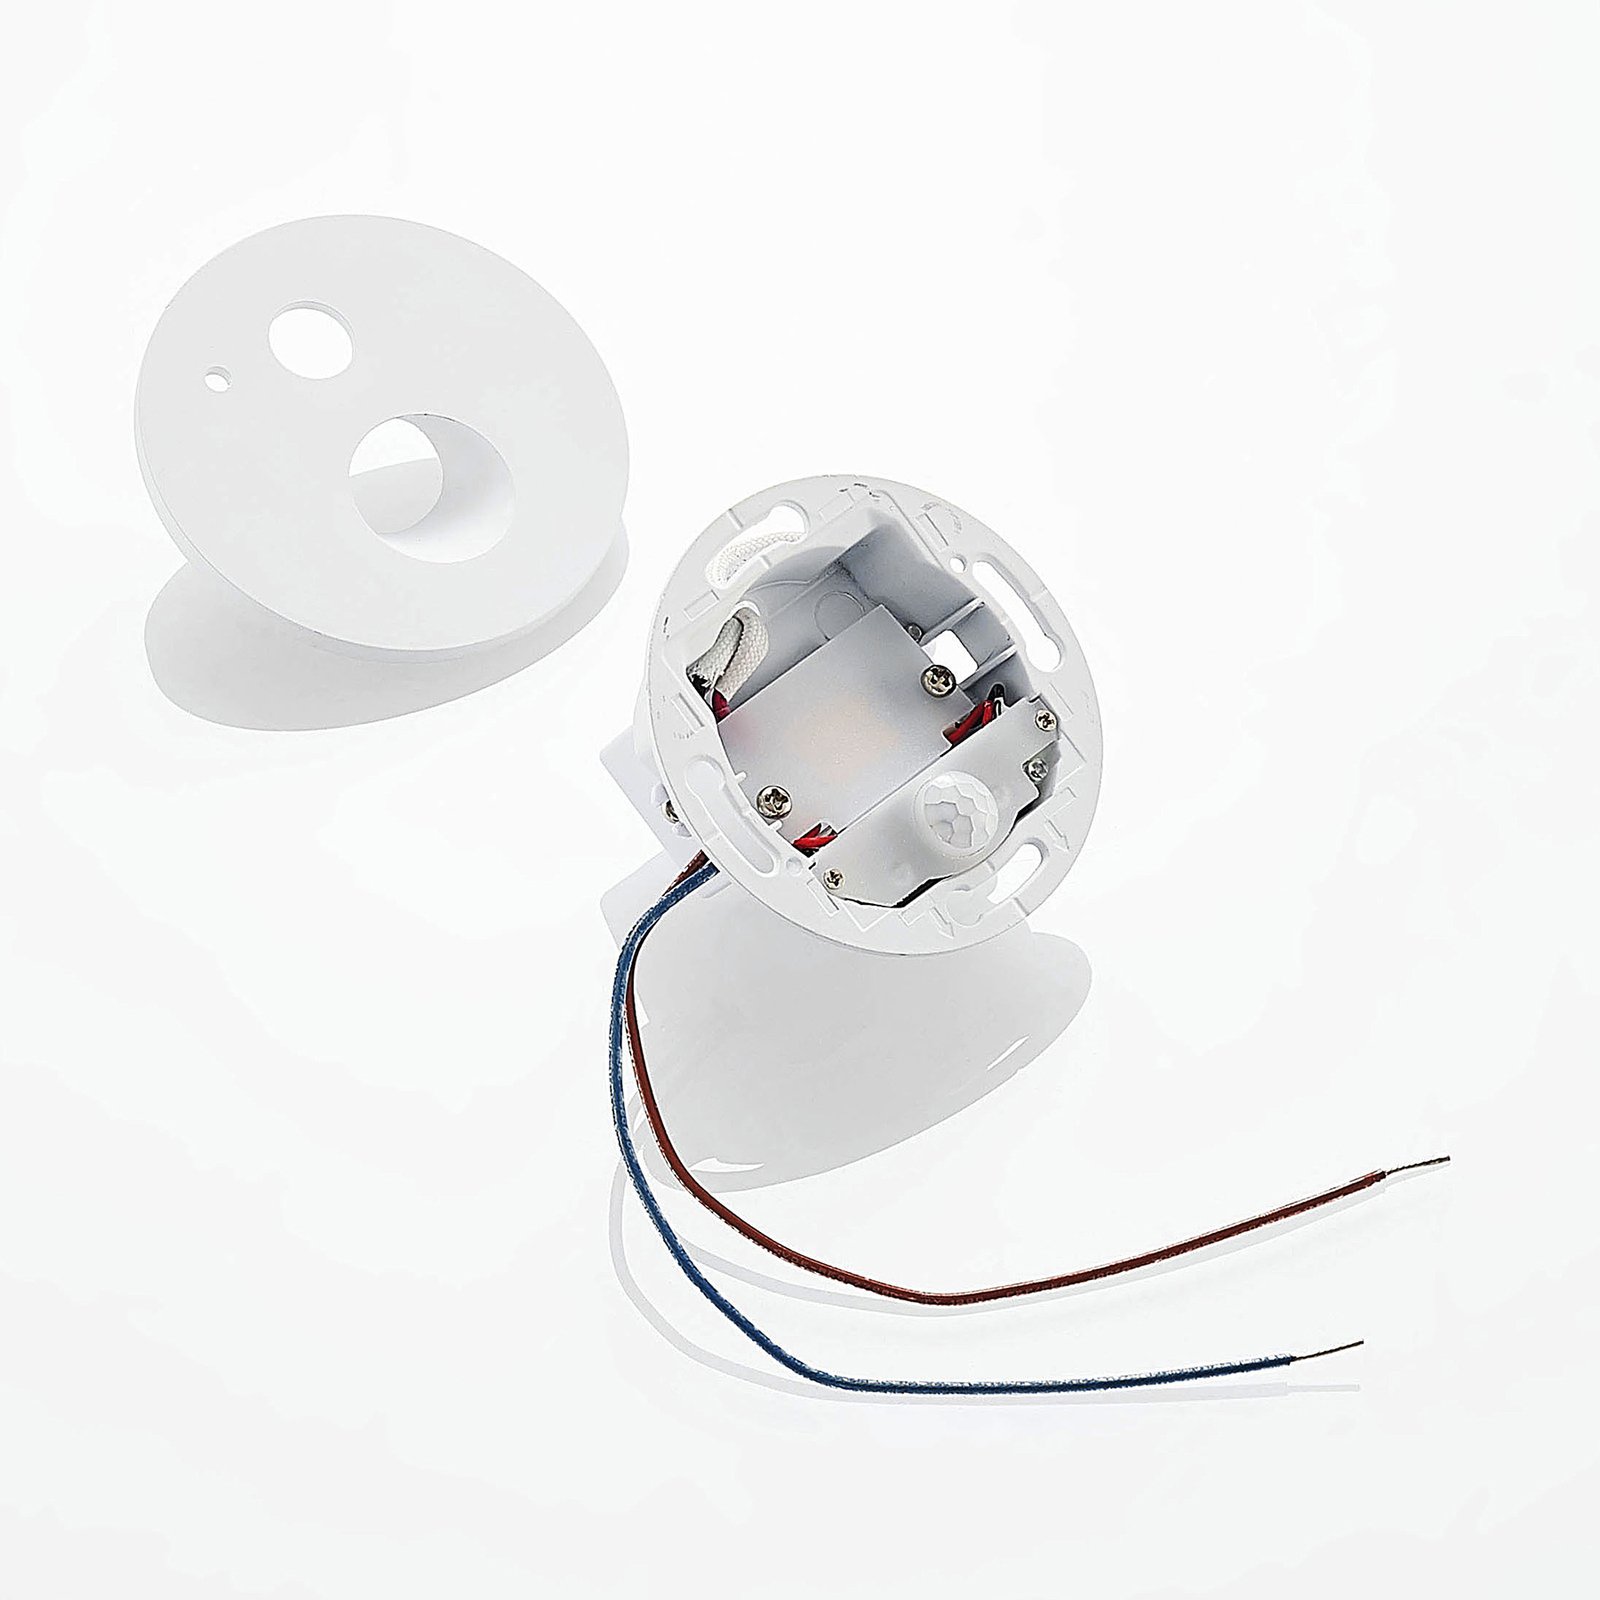 Arcchio Neru LED-inbyggnadslampa, rund, vit